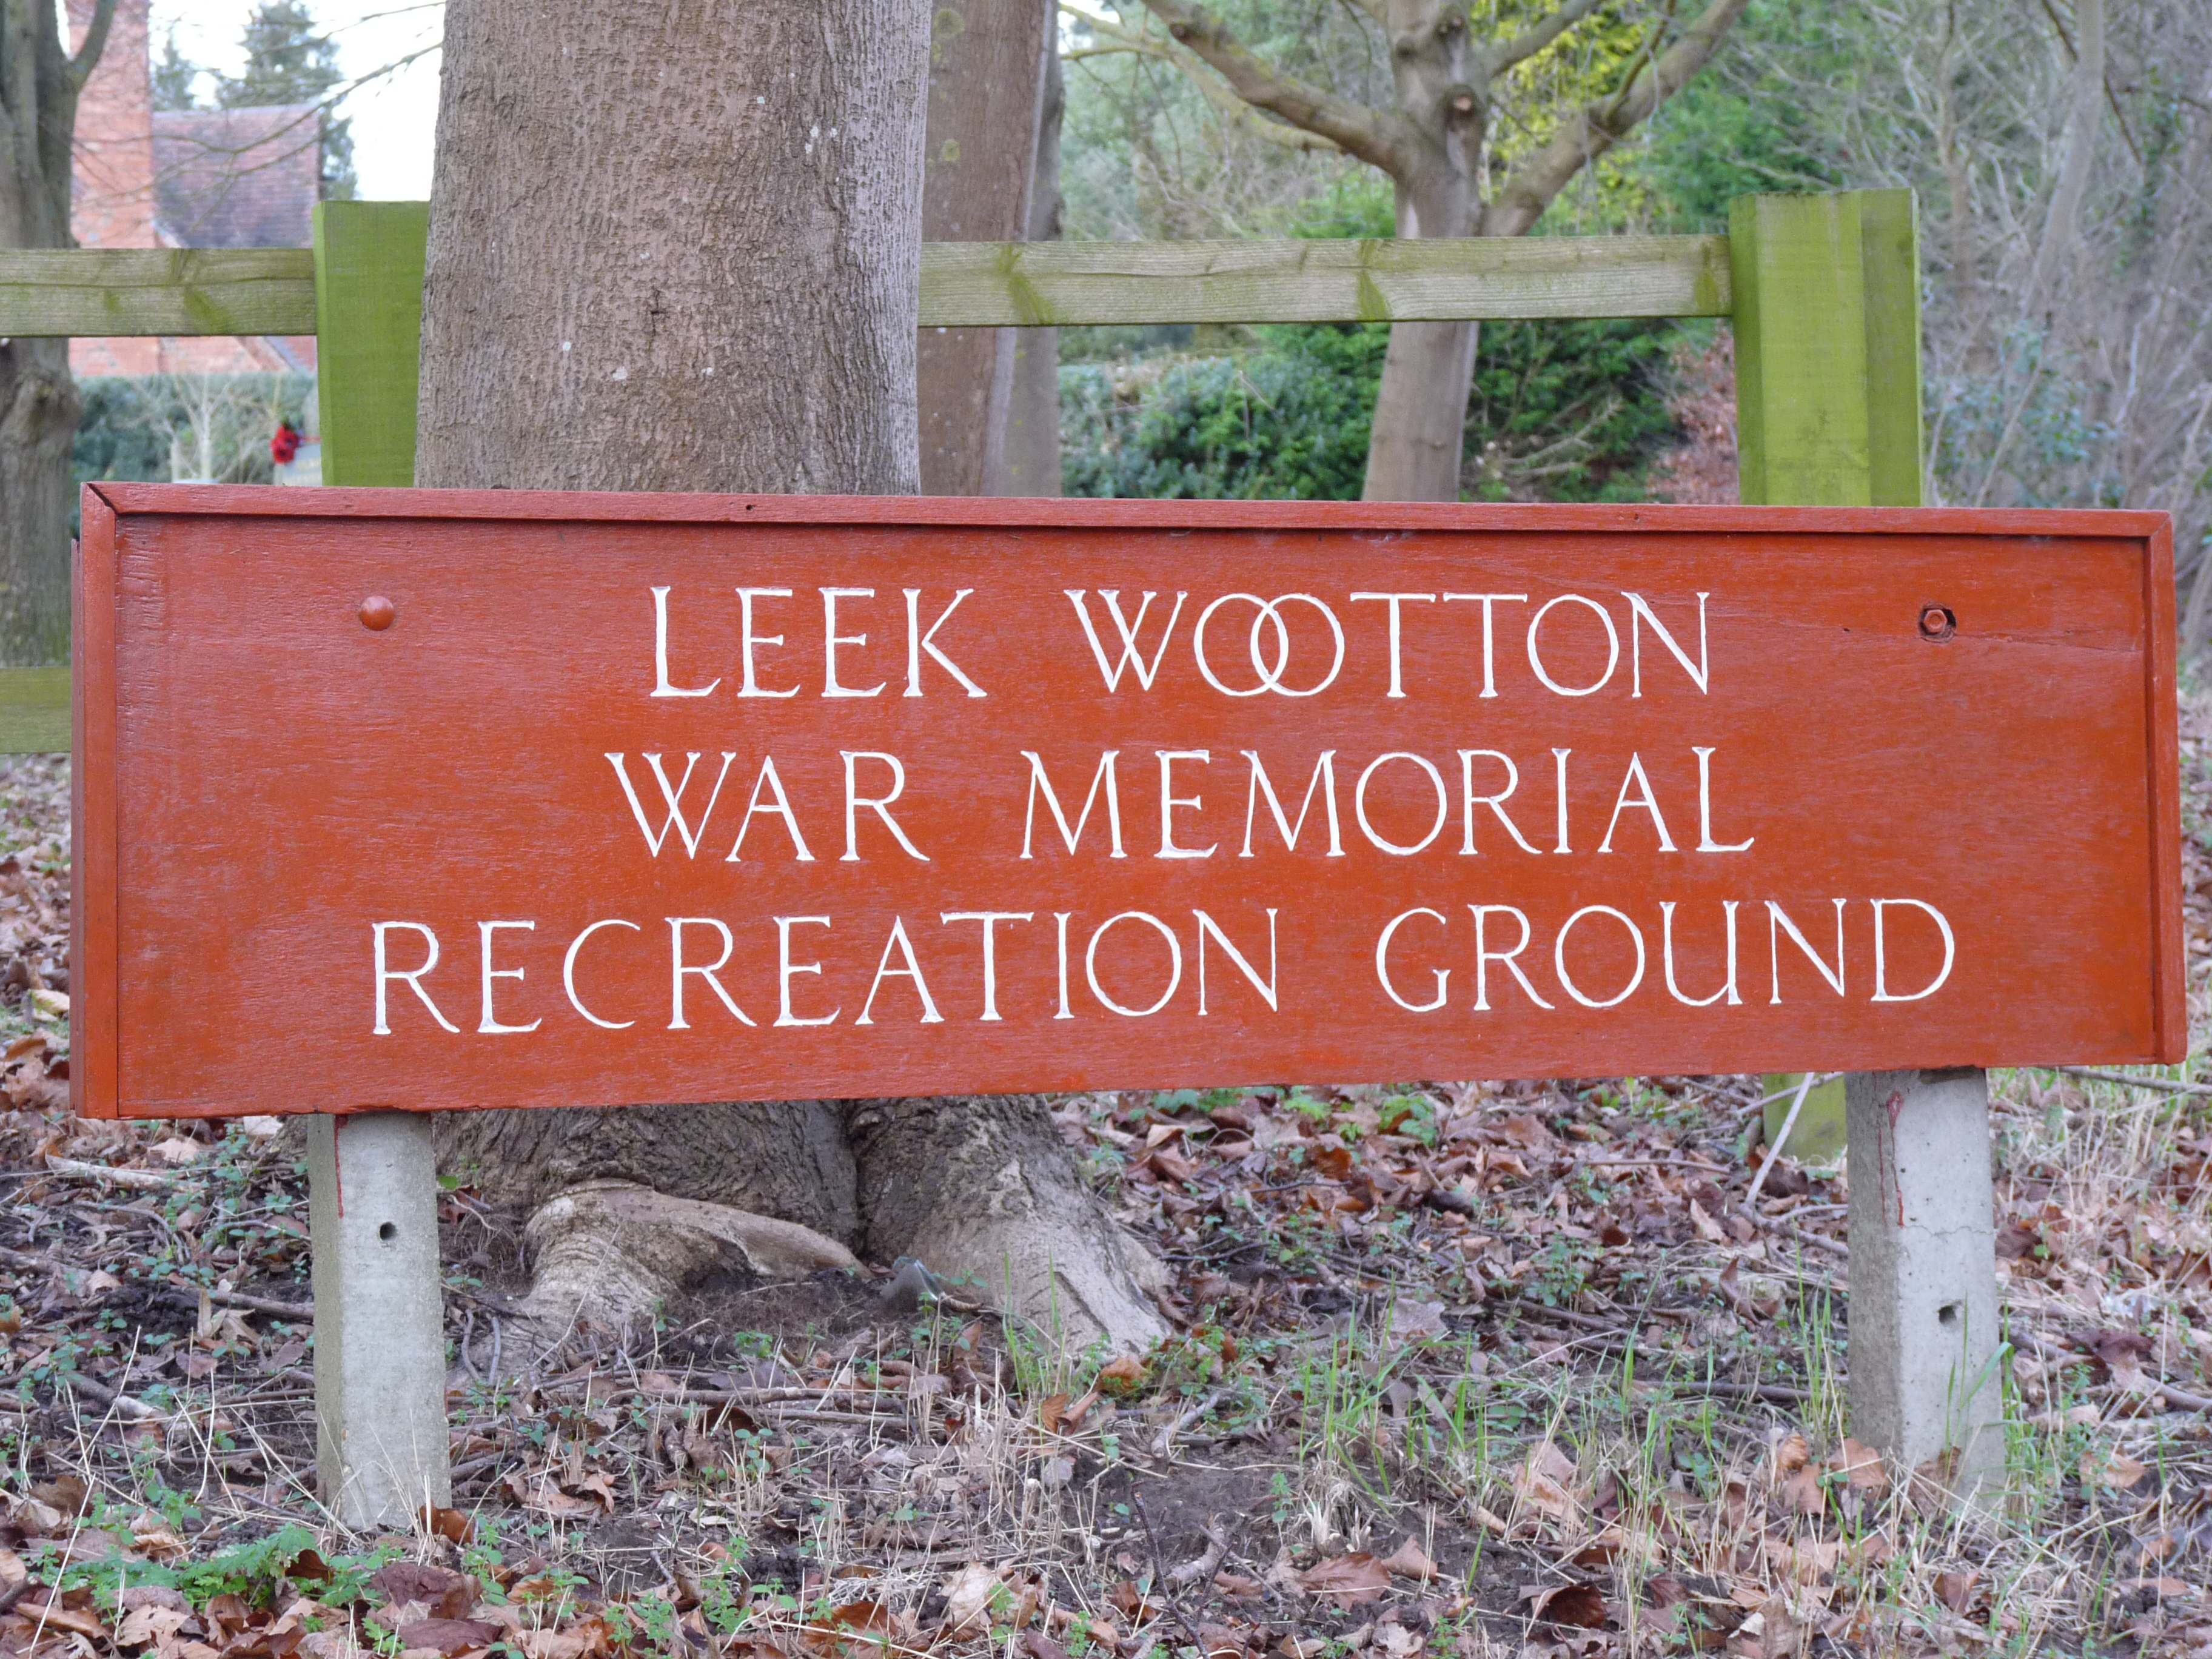 Leek Wootton War Memorial Recreation Ground